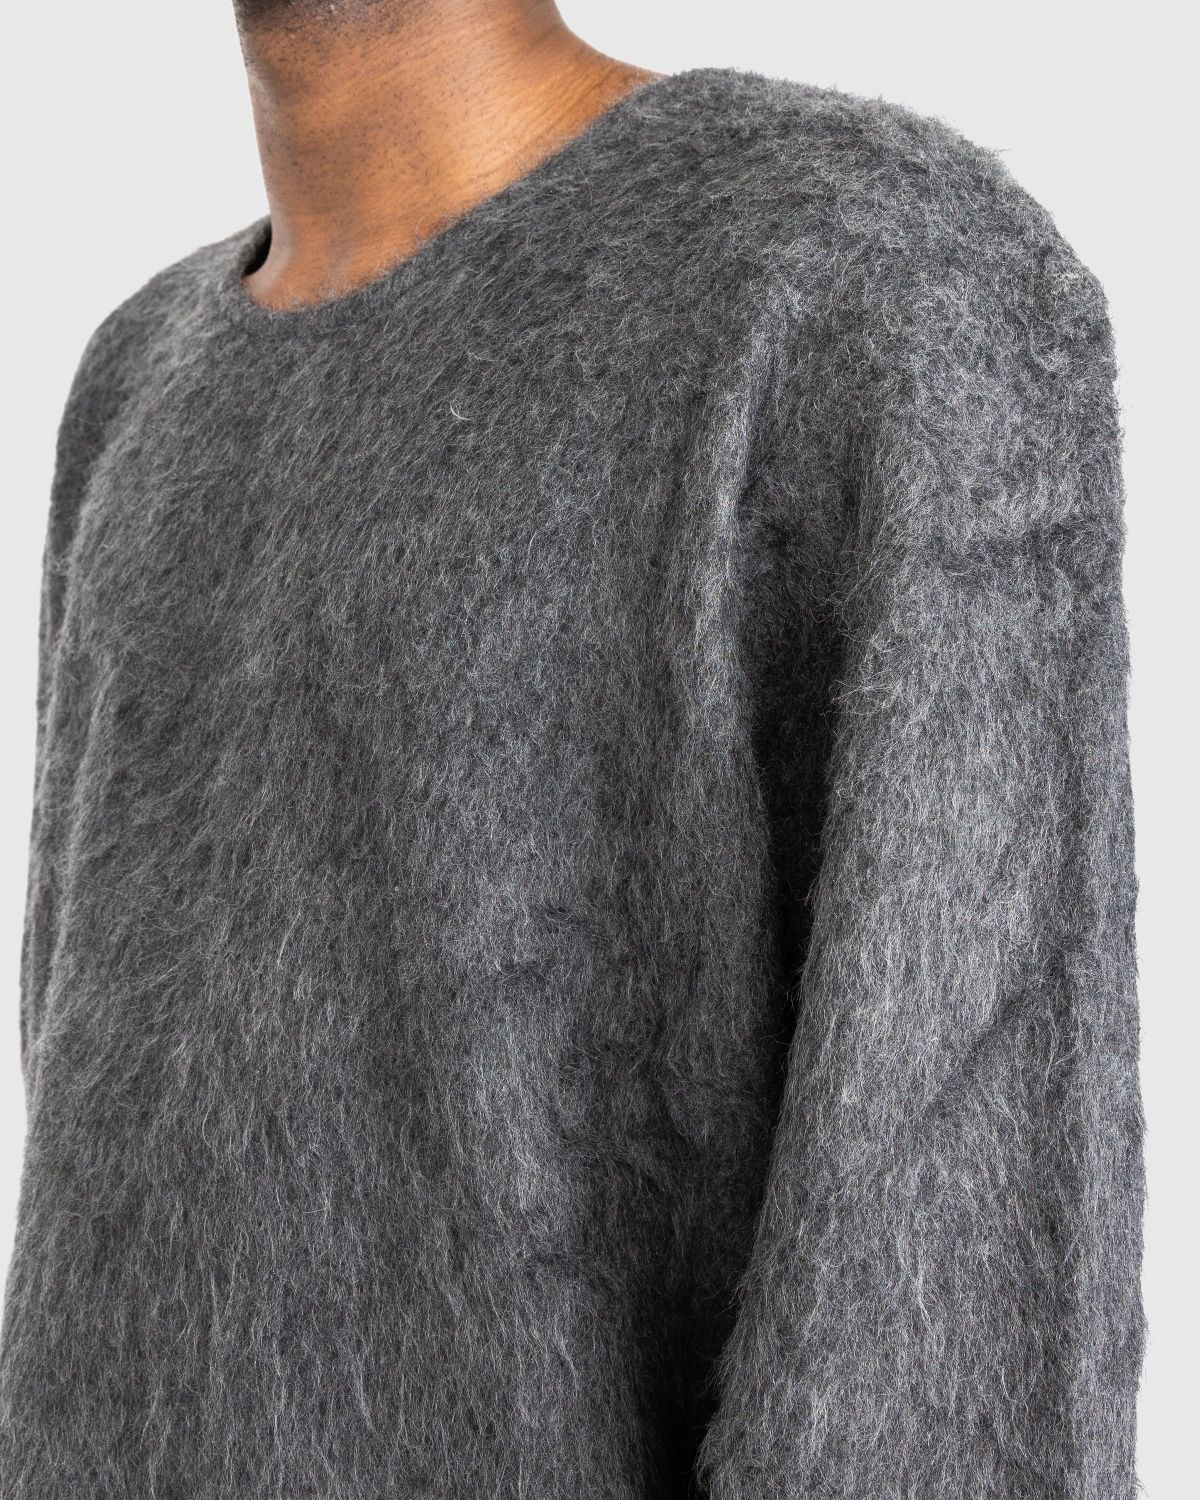 Our Legacy – Double Lock U Neck Sweater Ash Grey | Highsnobiety Shop